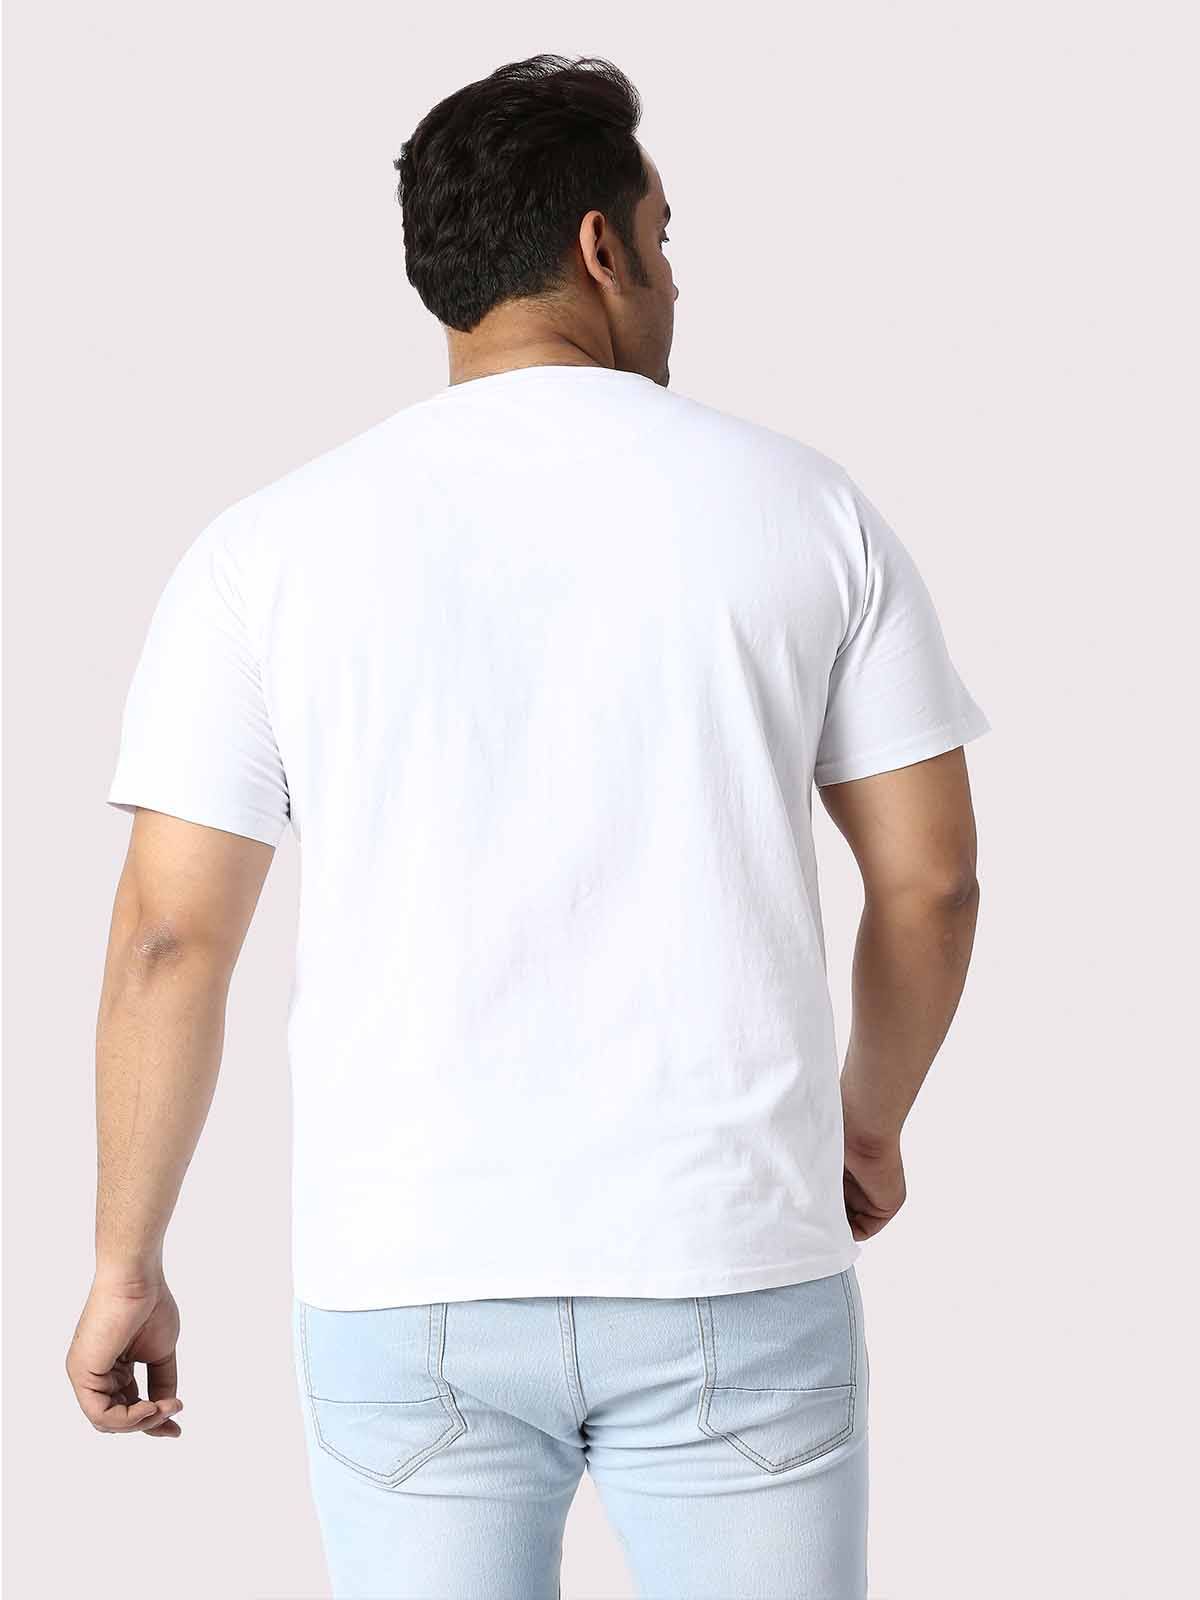 Men Plus Size White Tropical Skull Printed Round Neck T-Shirt - Guniaa Fashions